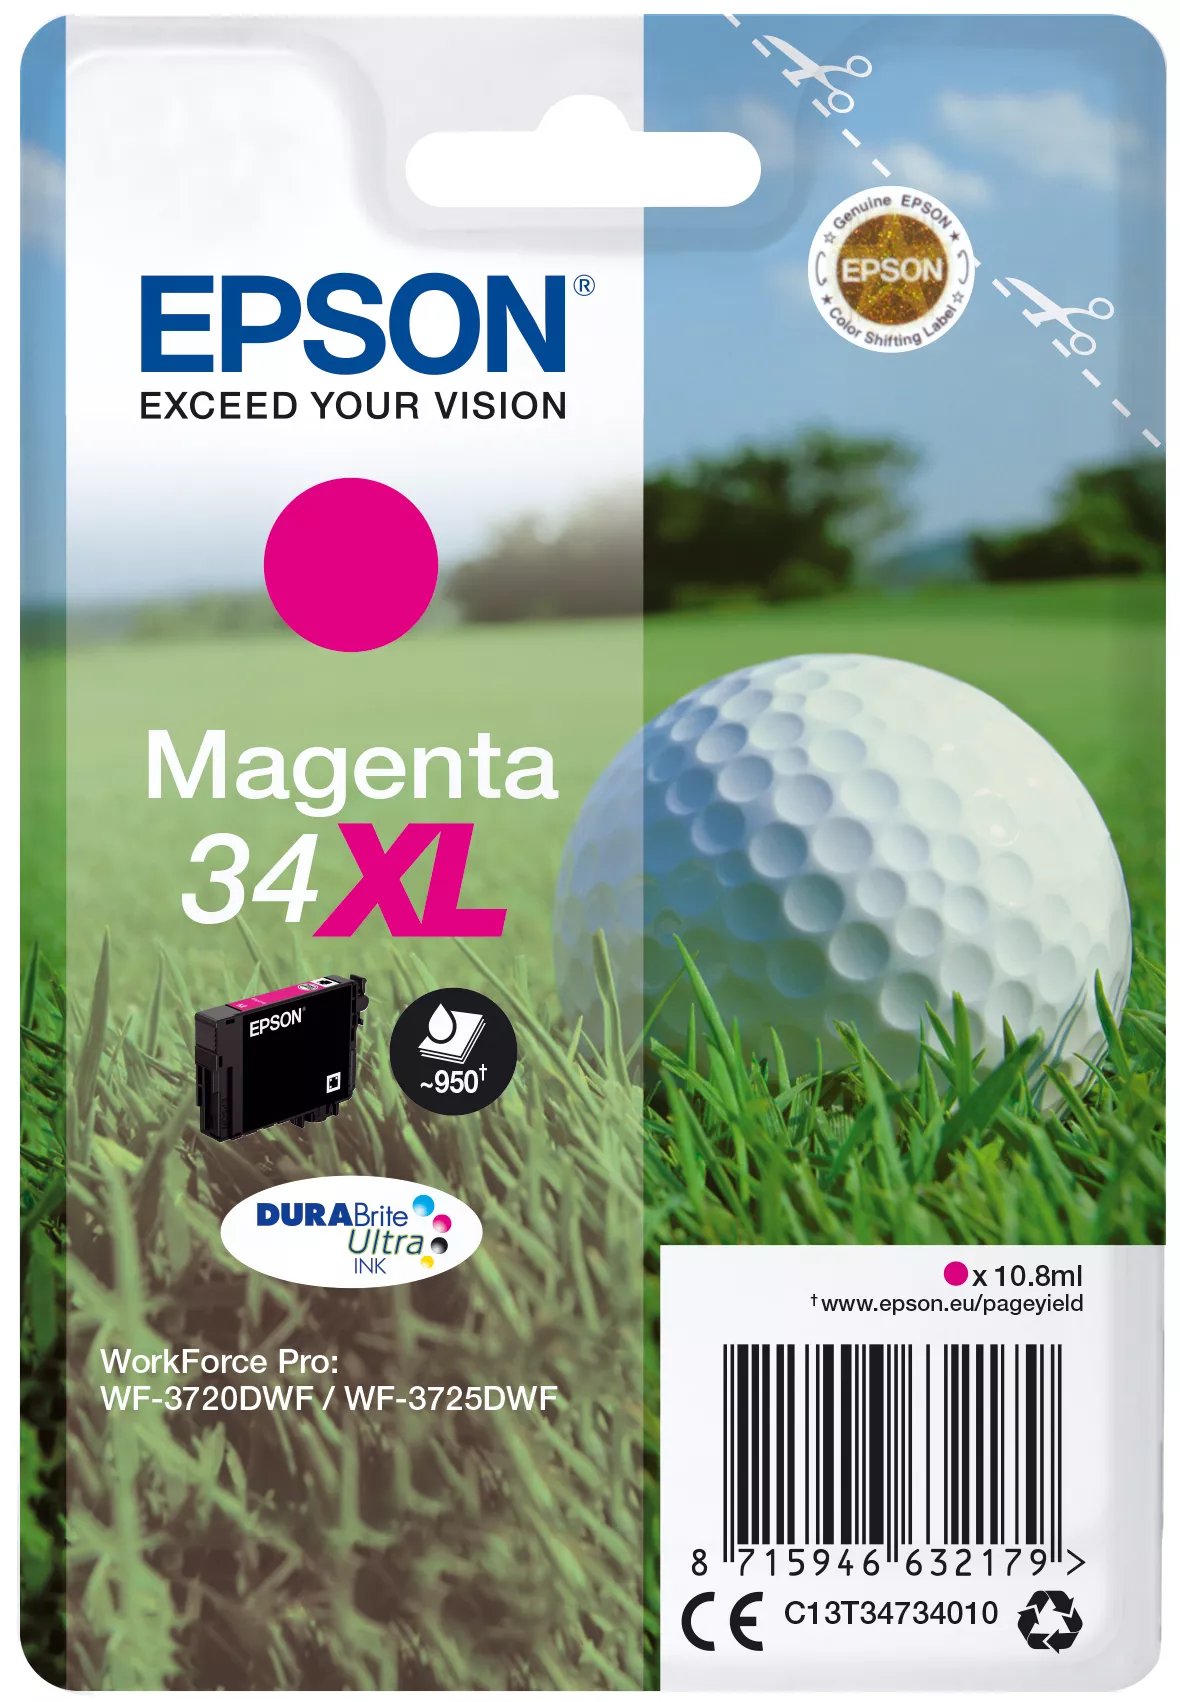 Achat EPSON Singlepack 34XL Magenta DURABrite Encre Ultra (XL au meilleur prix